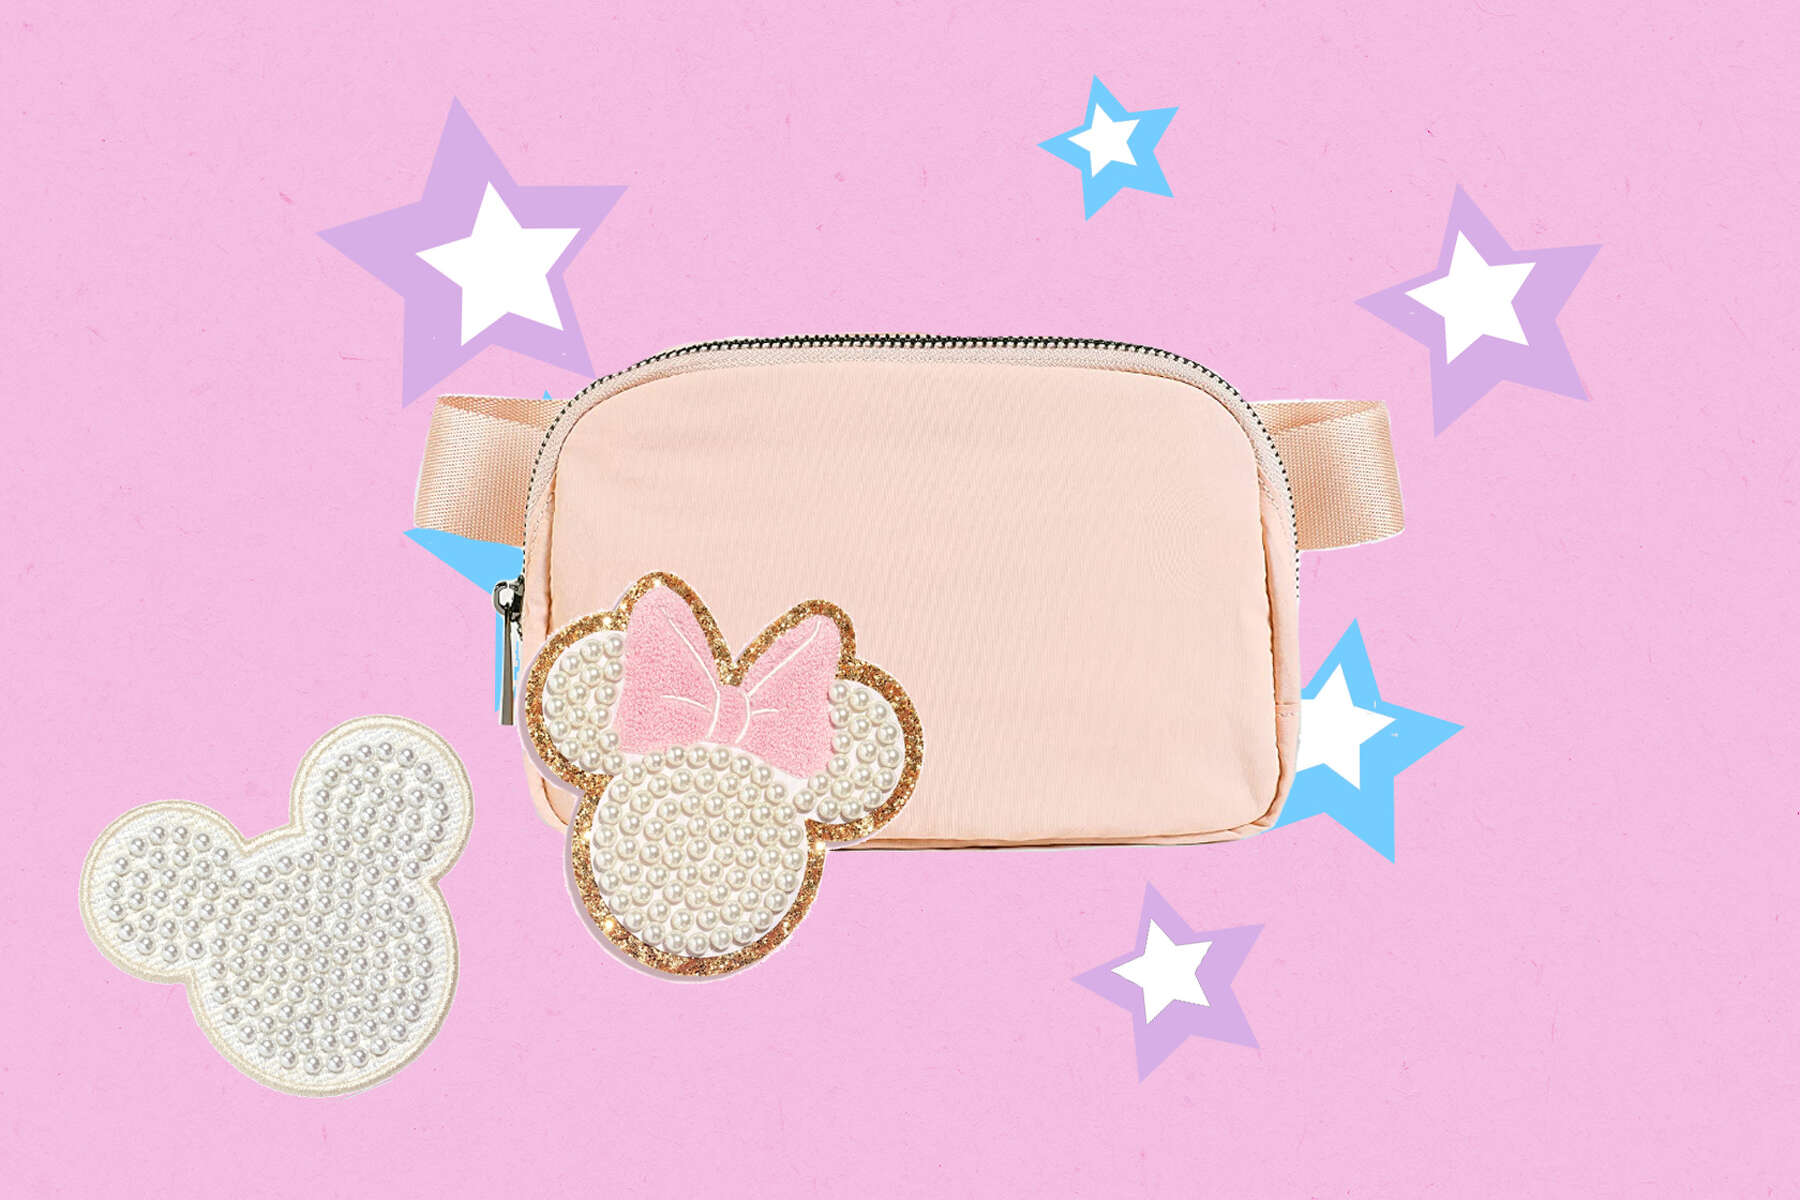 How to make your own Stoney Clover Disney bag, according to TikTok